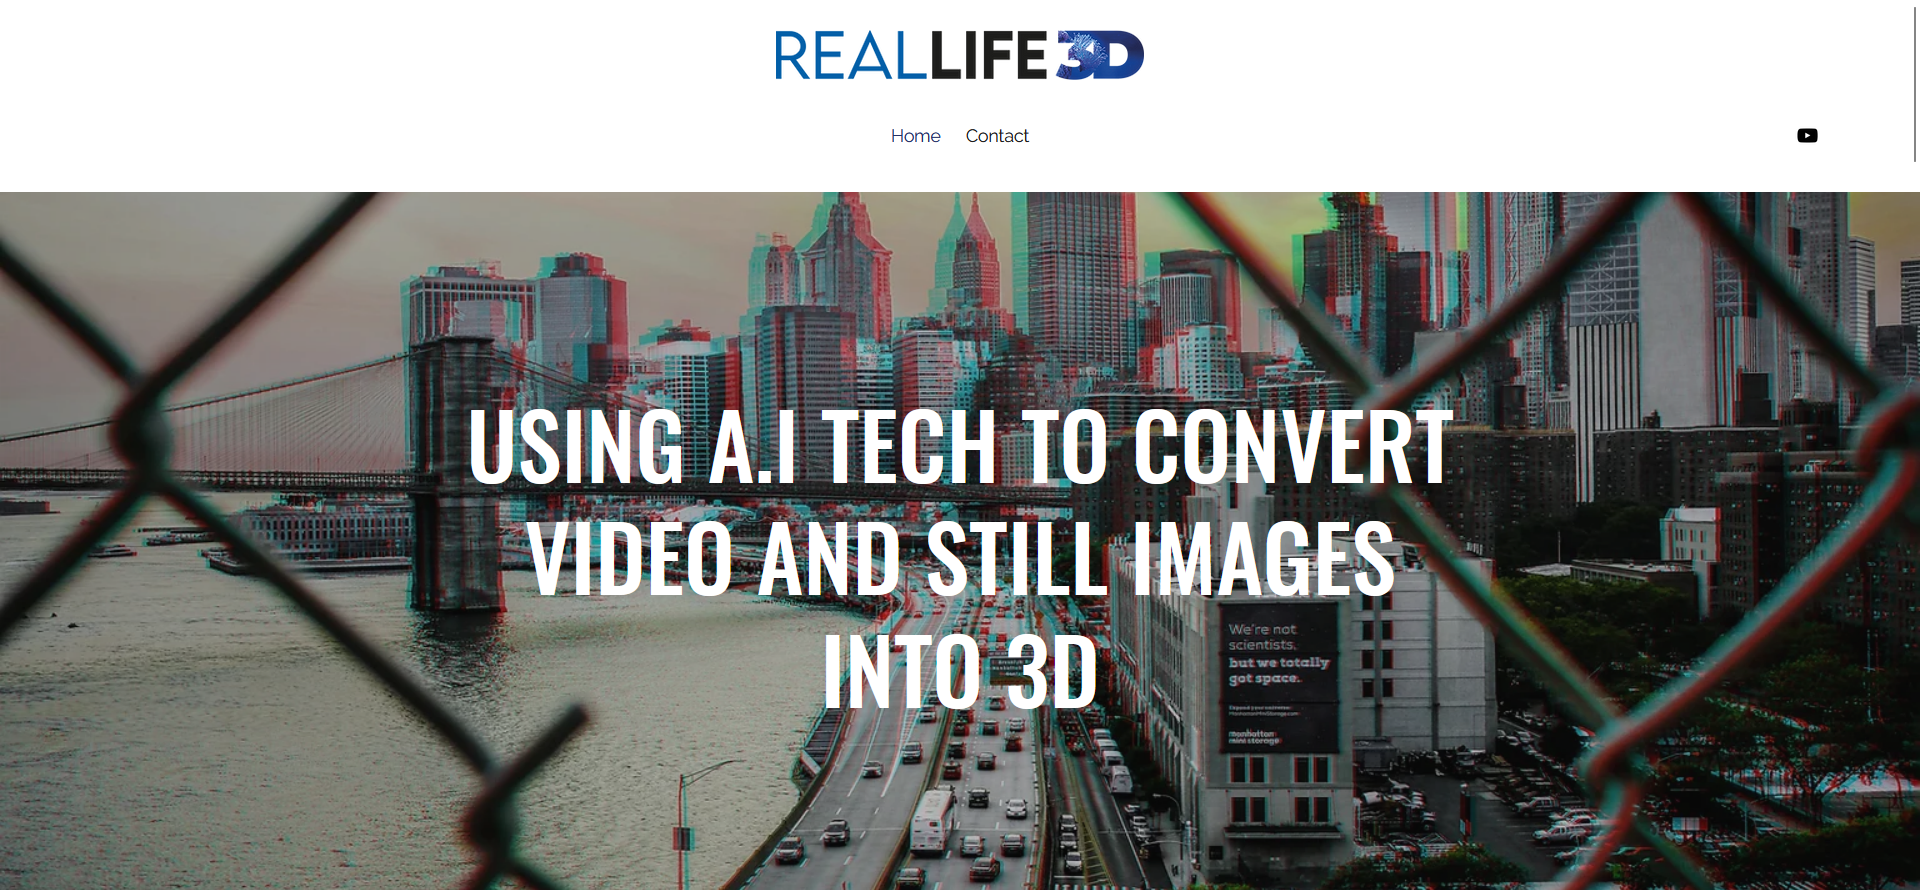 Post: Real Life 3D